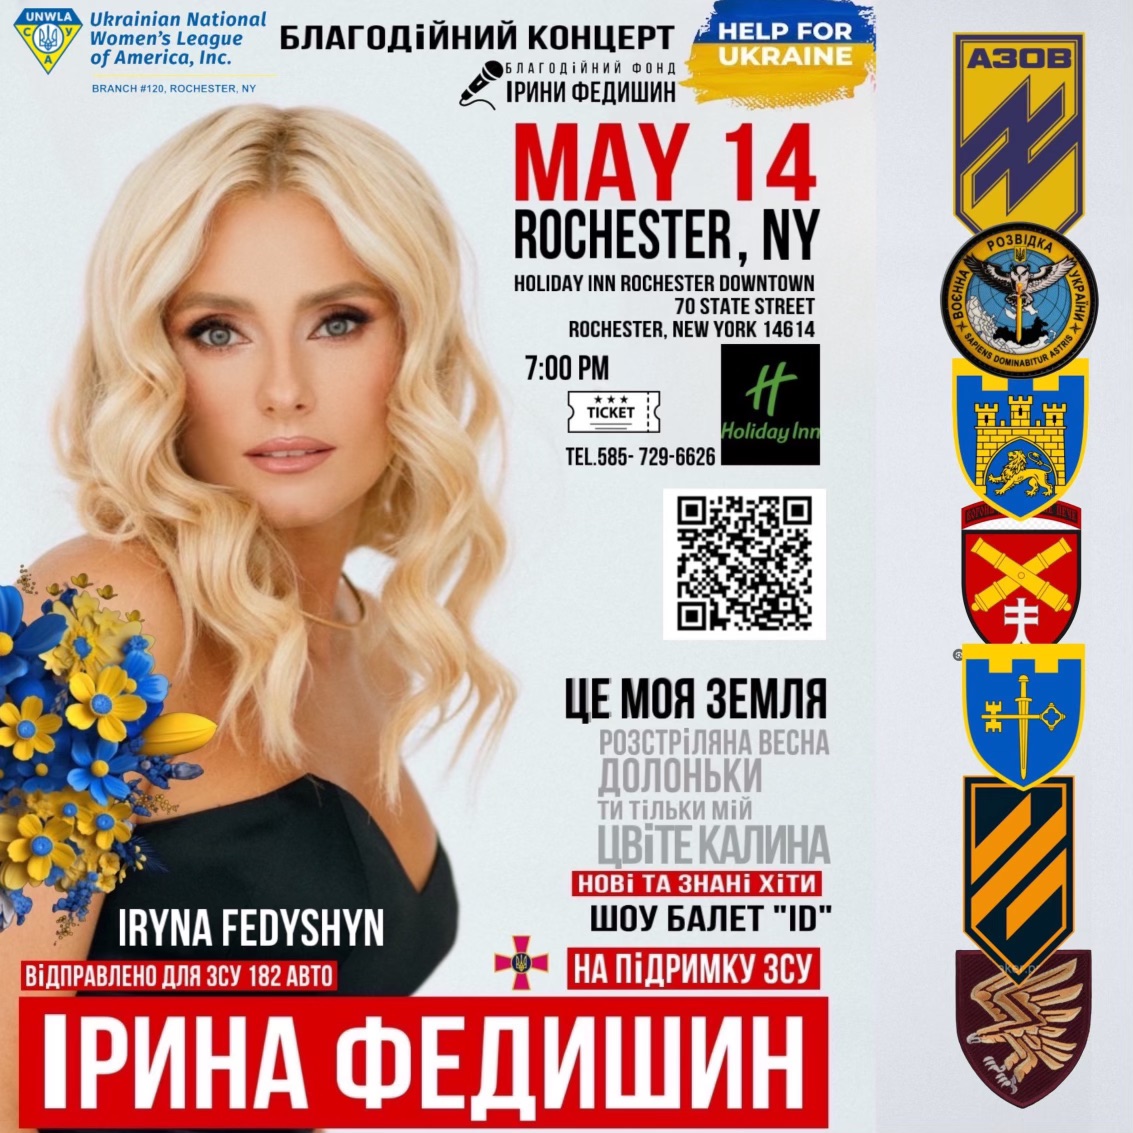 Iryna Fedyshyn Charity Concert - May 14 - NY